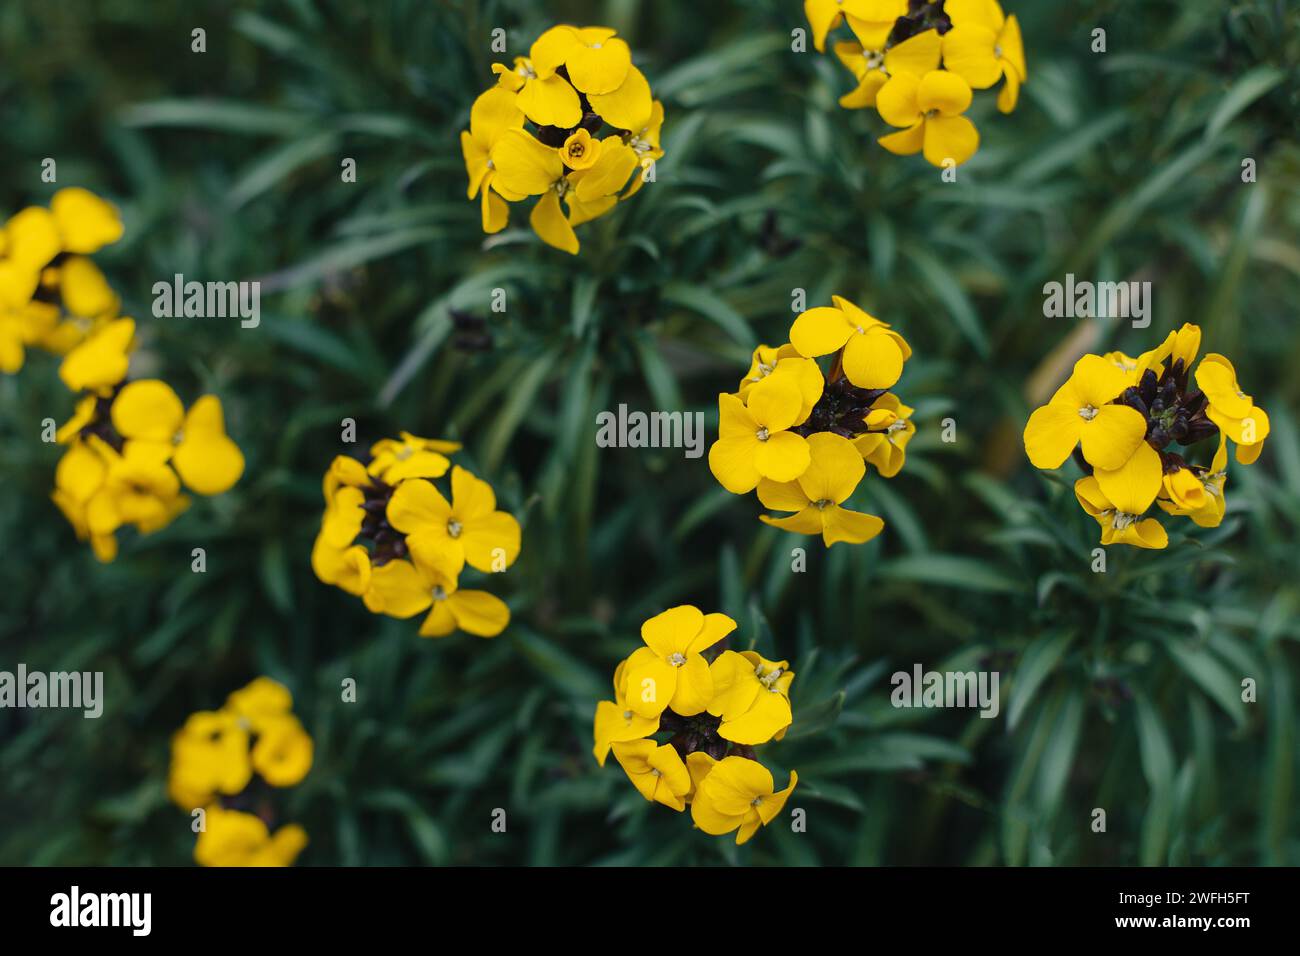 Beautiful yellow flowers of Wallflower (Erysimum cheiri) in a spring garden. Selective focus. Stock Photo